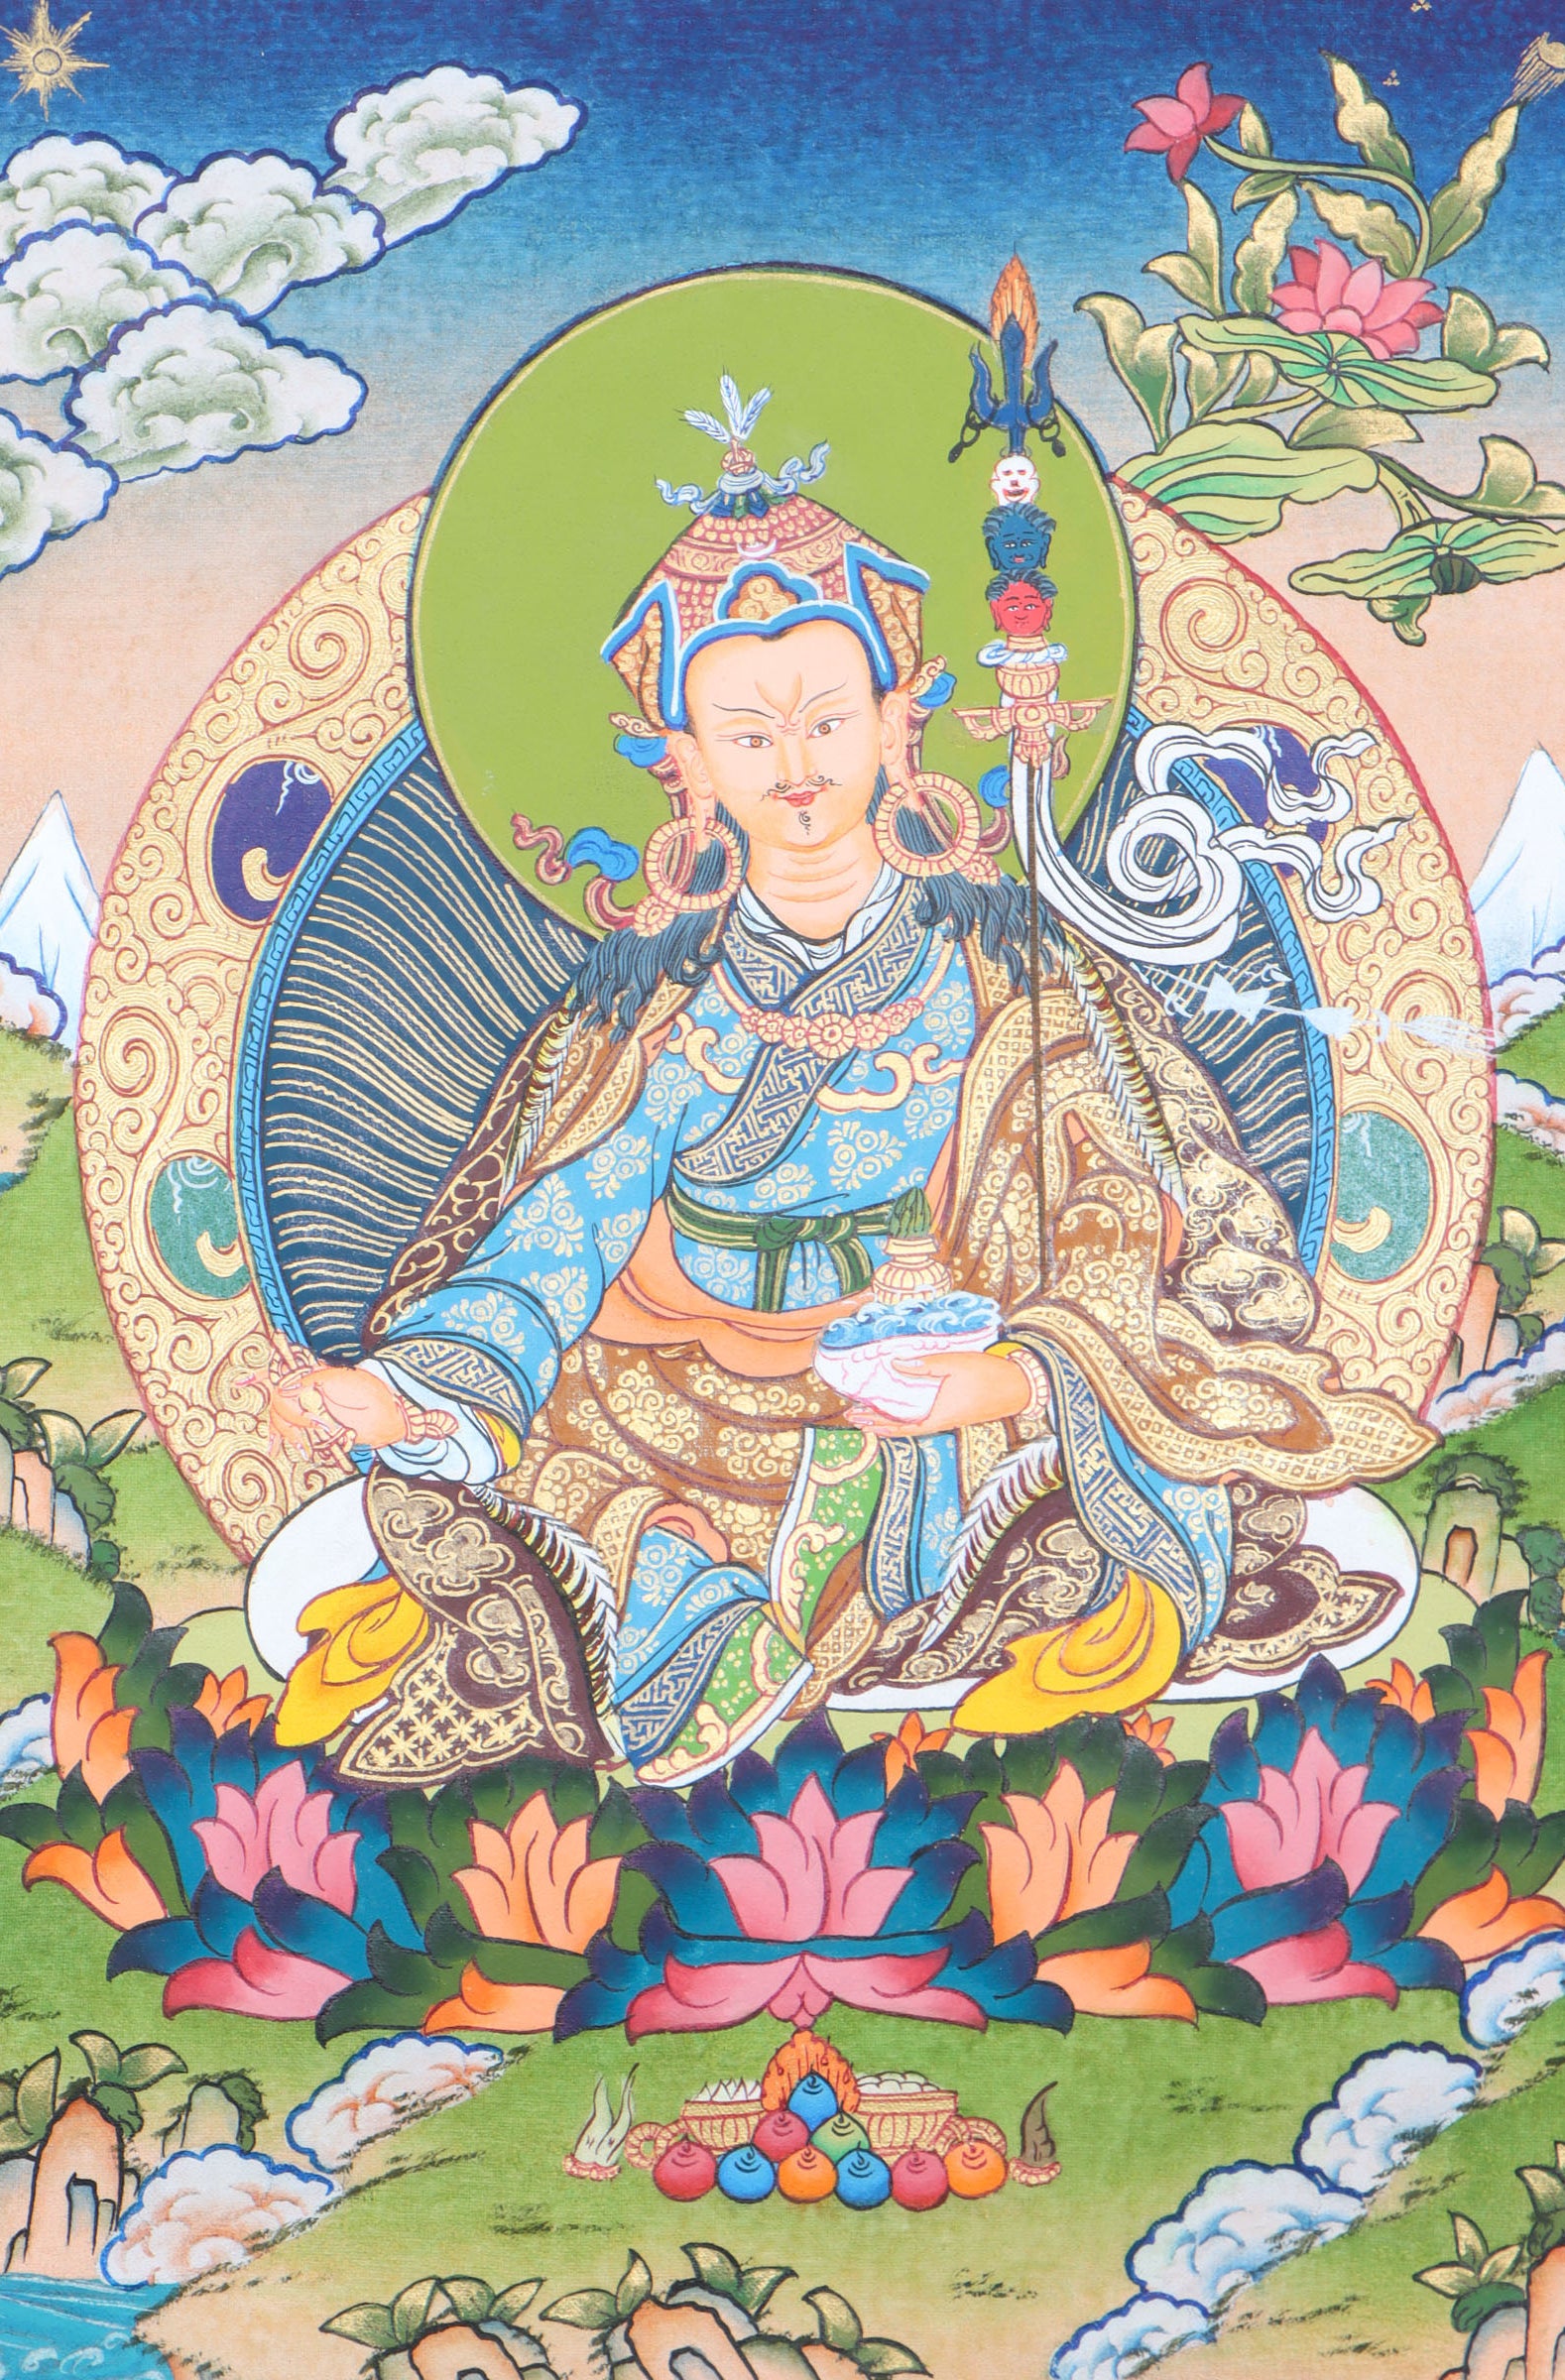 Guru Rinpoche Thangka representing the everlasting nature of enlightenment